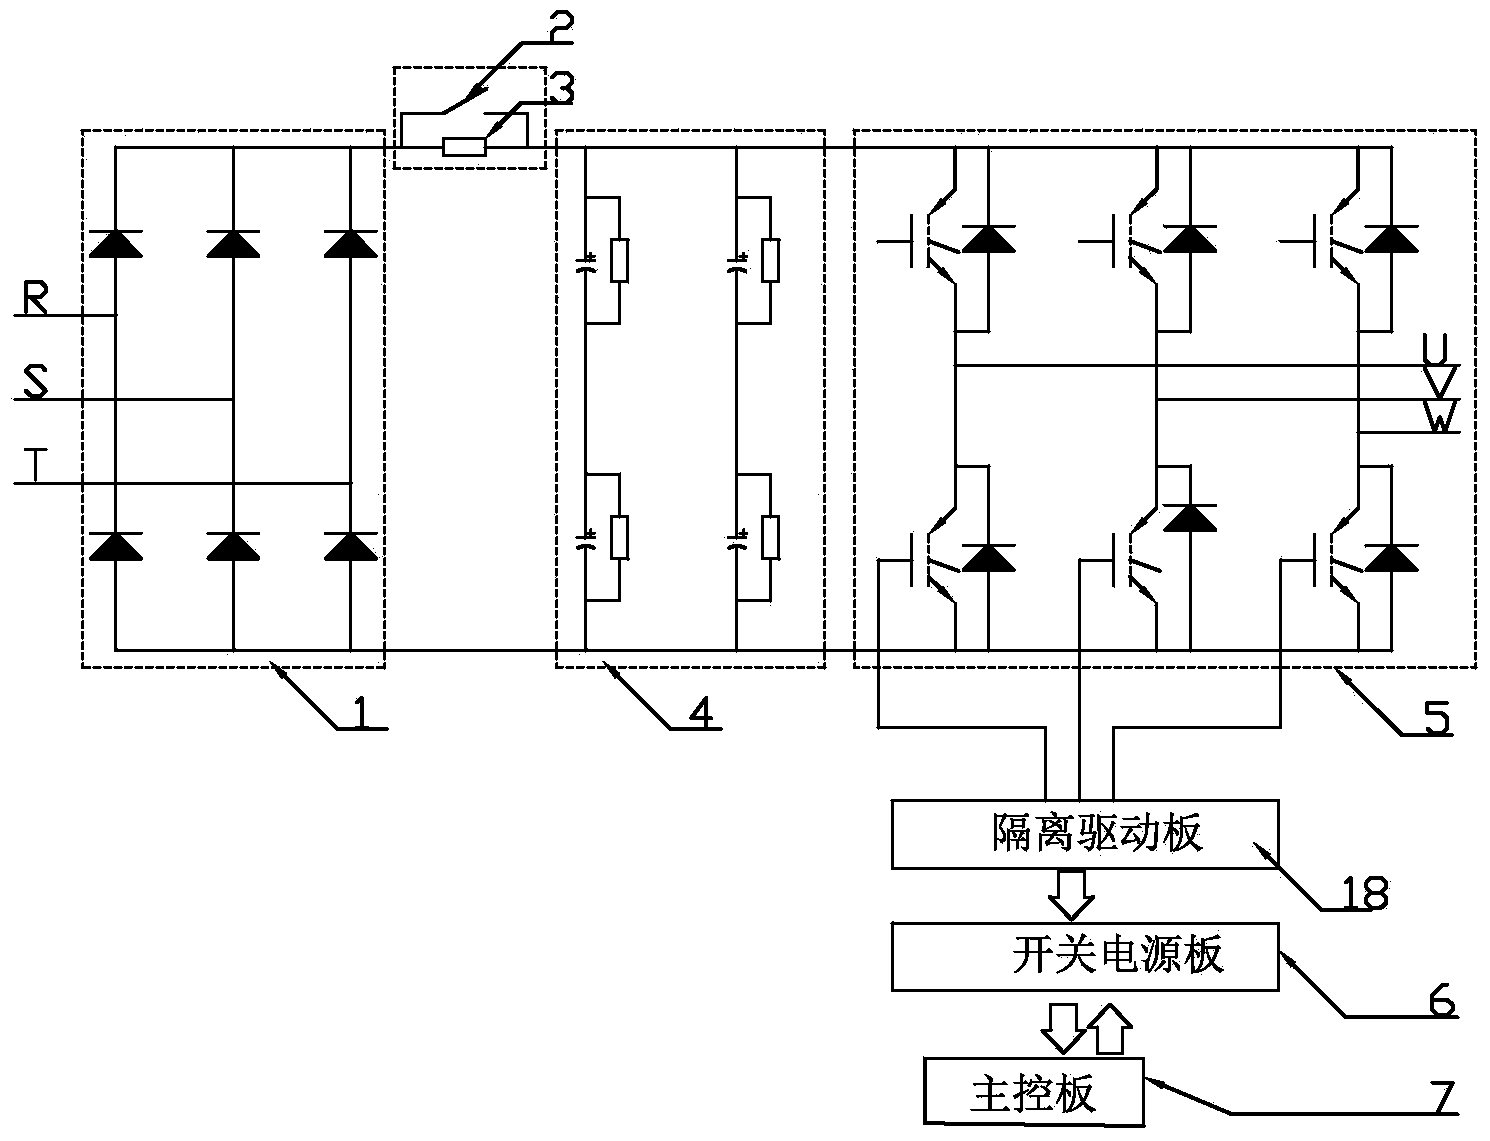 Four-quadrant frequency converter